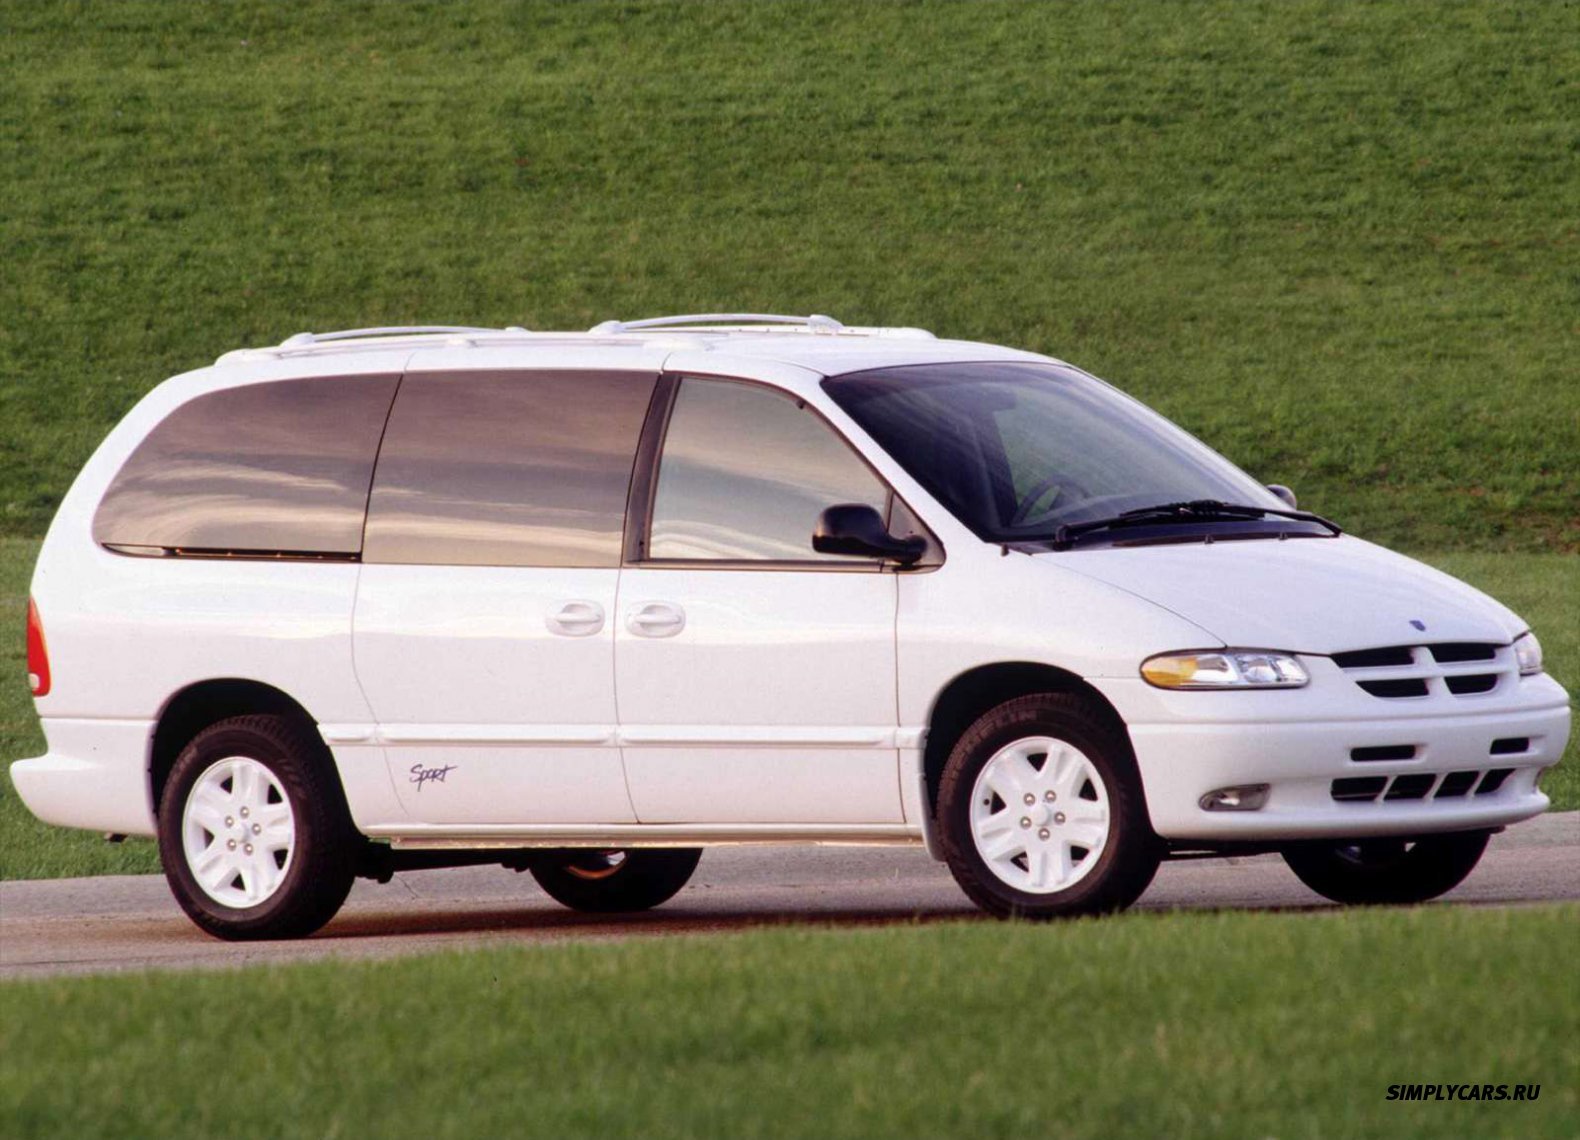 Караван бел. Dodge Grand Caravan 1995. Dodge Caravan III 1995 – 2000. Dodge Grand Caravan 1996. Dodge Grand Caravan 3.